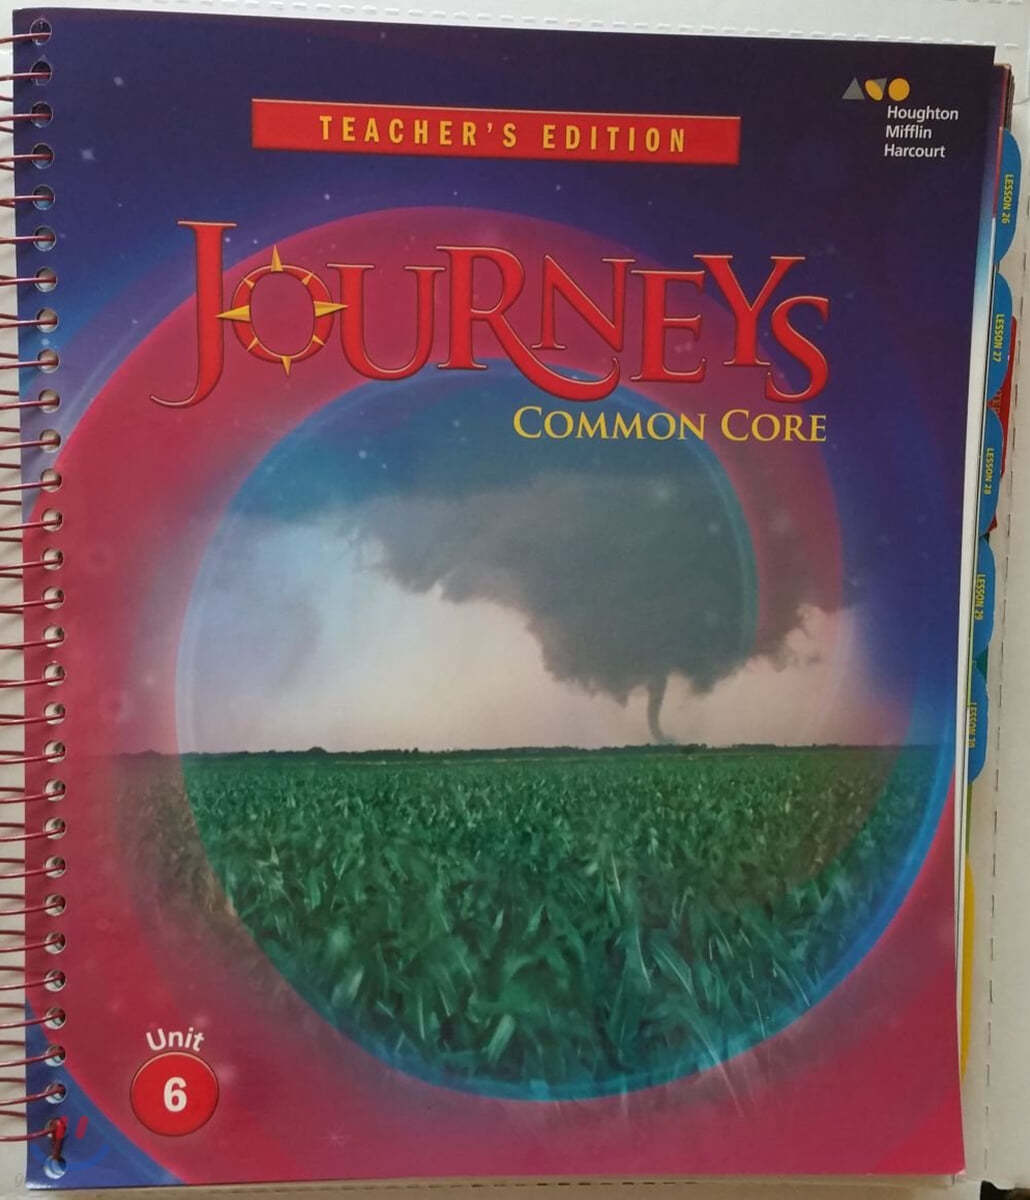 Journeys Common Core Teacher's Edition G6.6